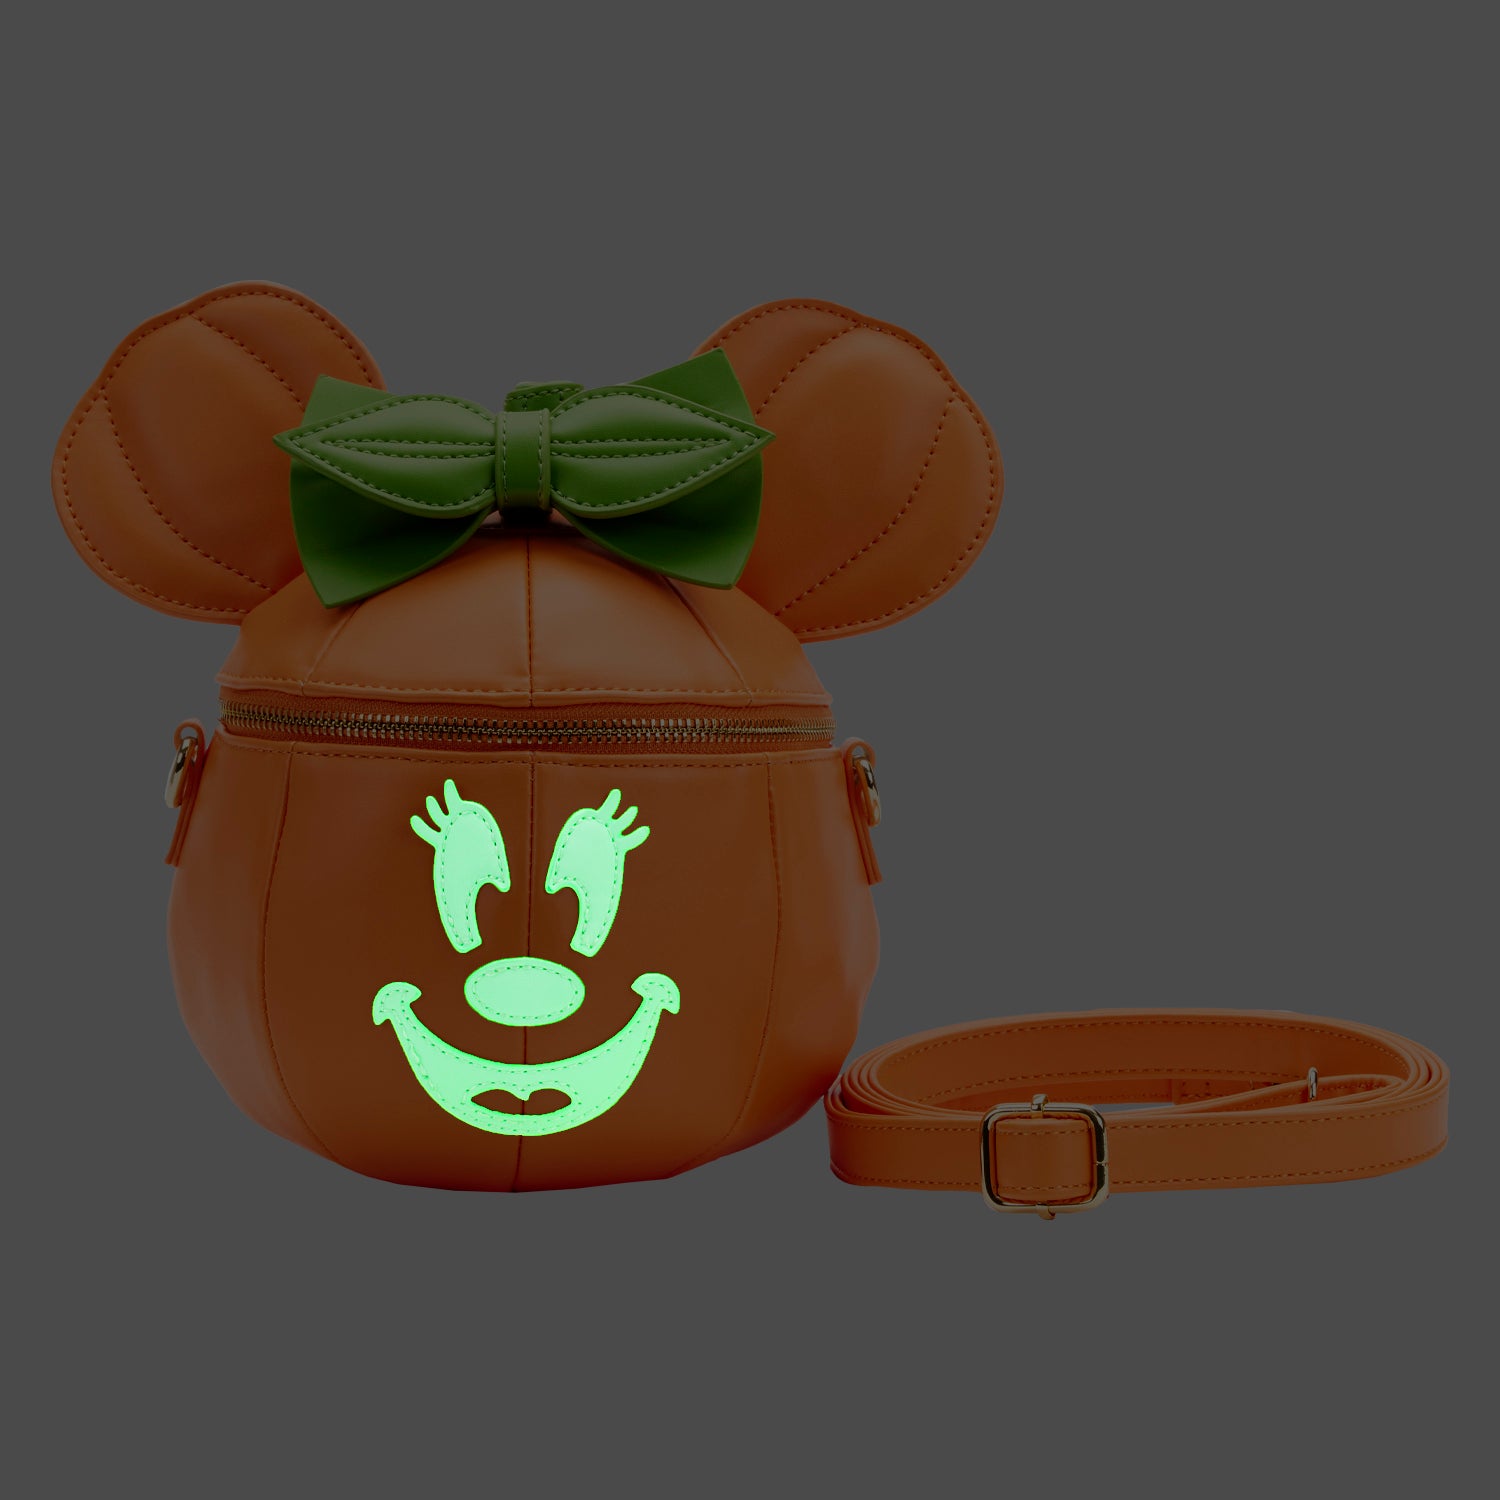 Disney | Minnie Mouse Pumpkin Glow Face Crossbody